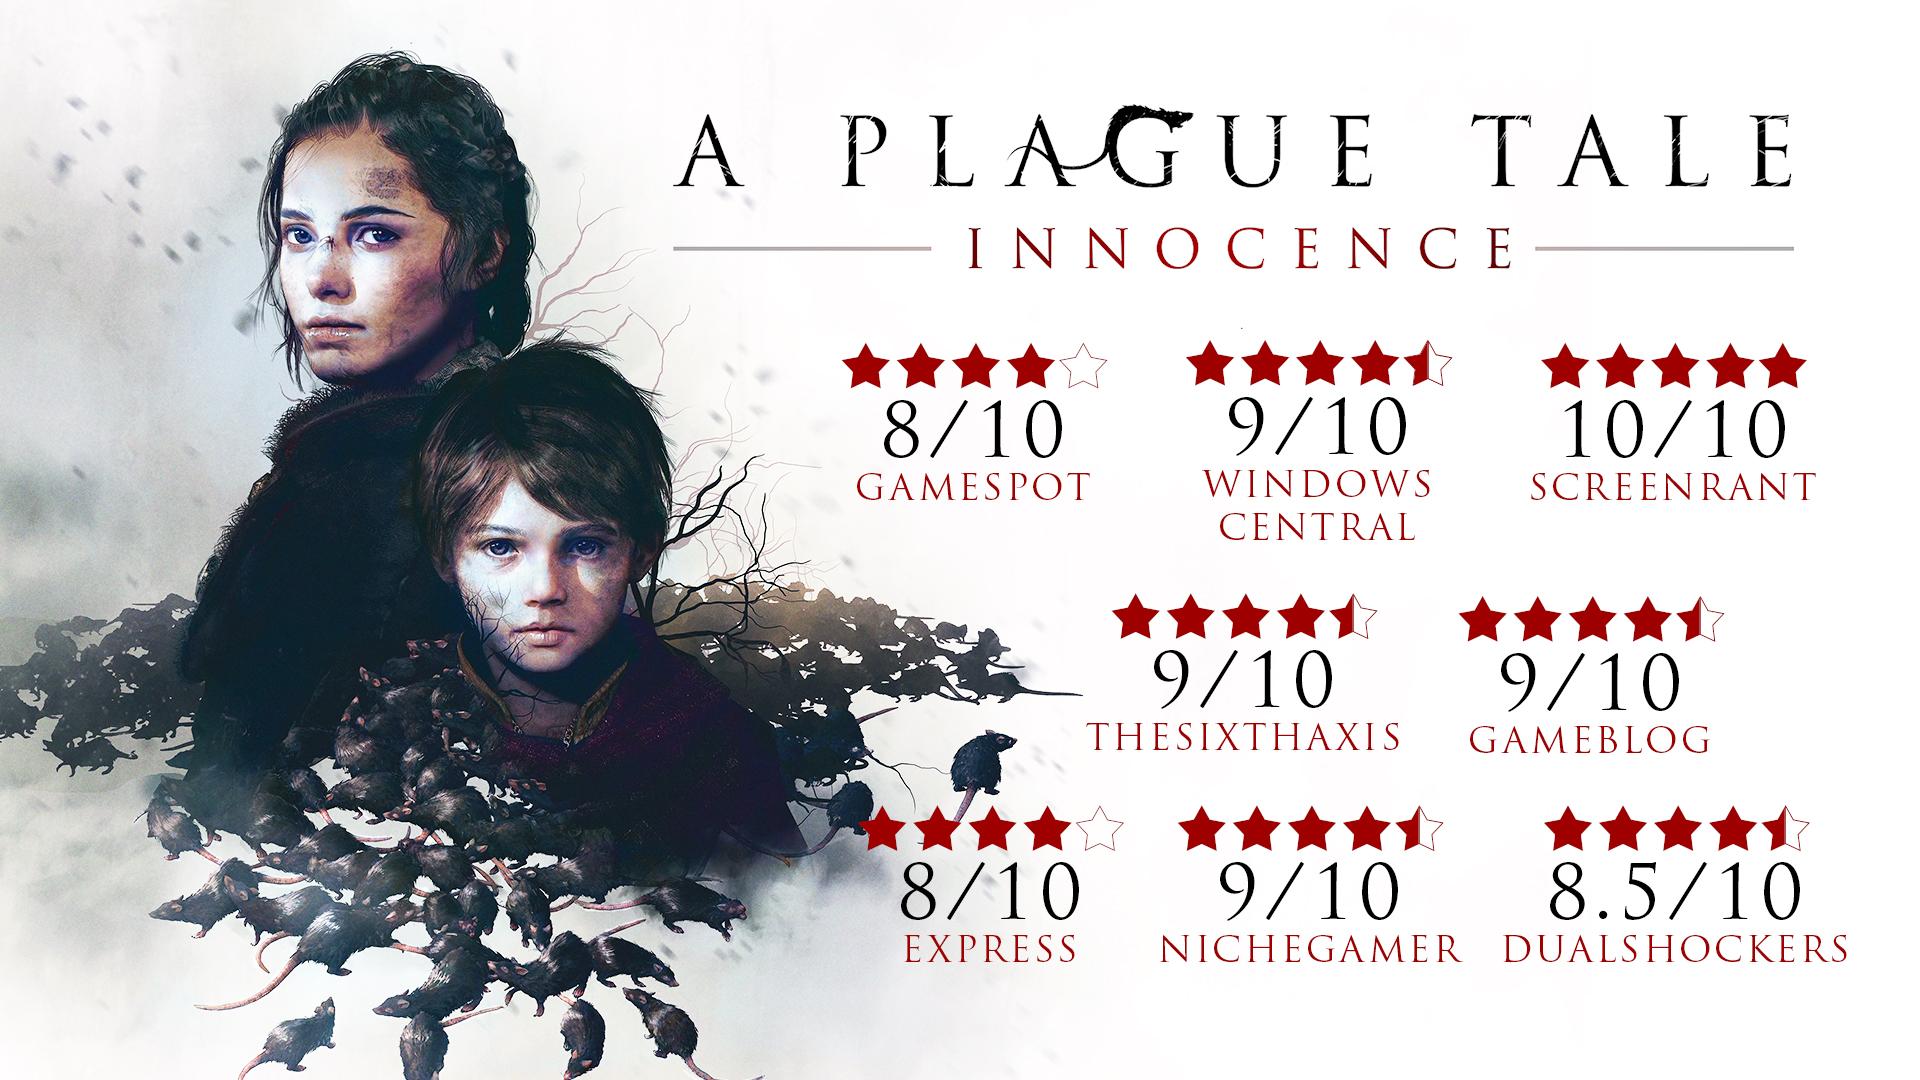 Screenshot №1 from game A Plague Tale: Innocence